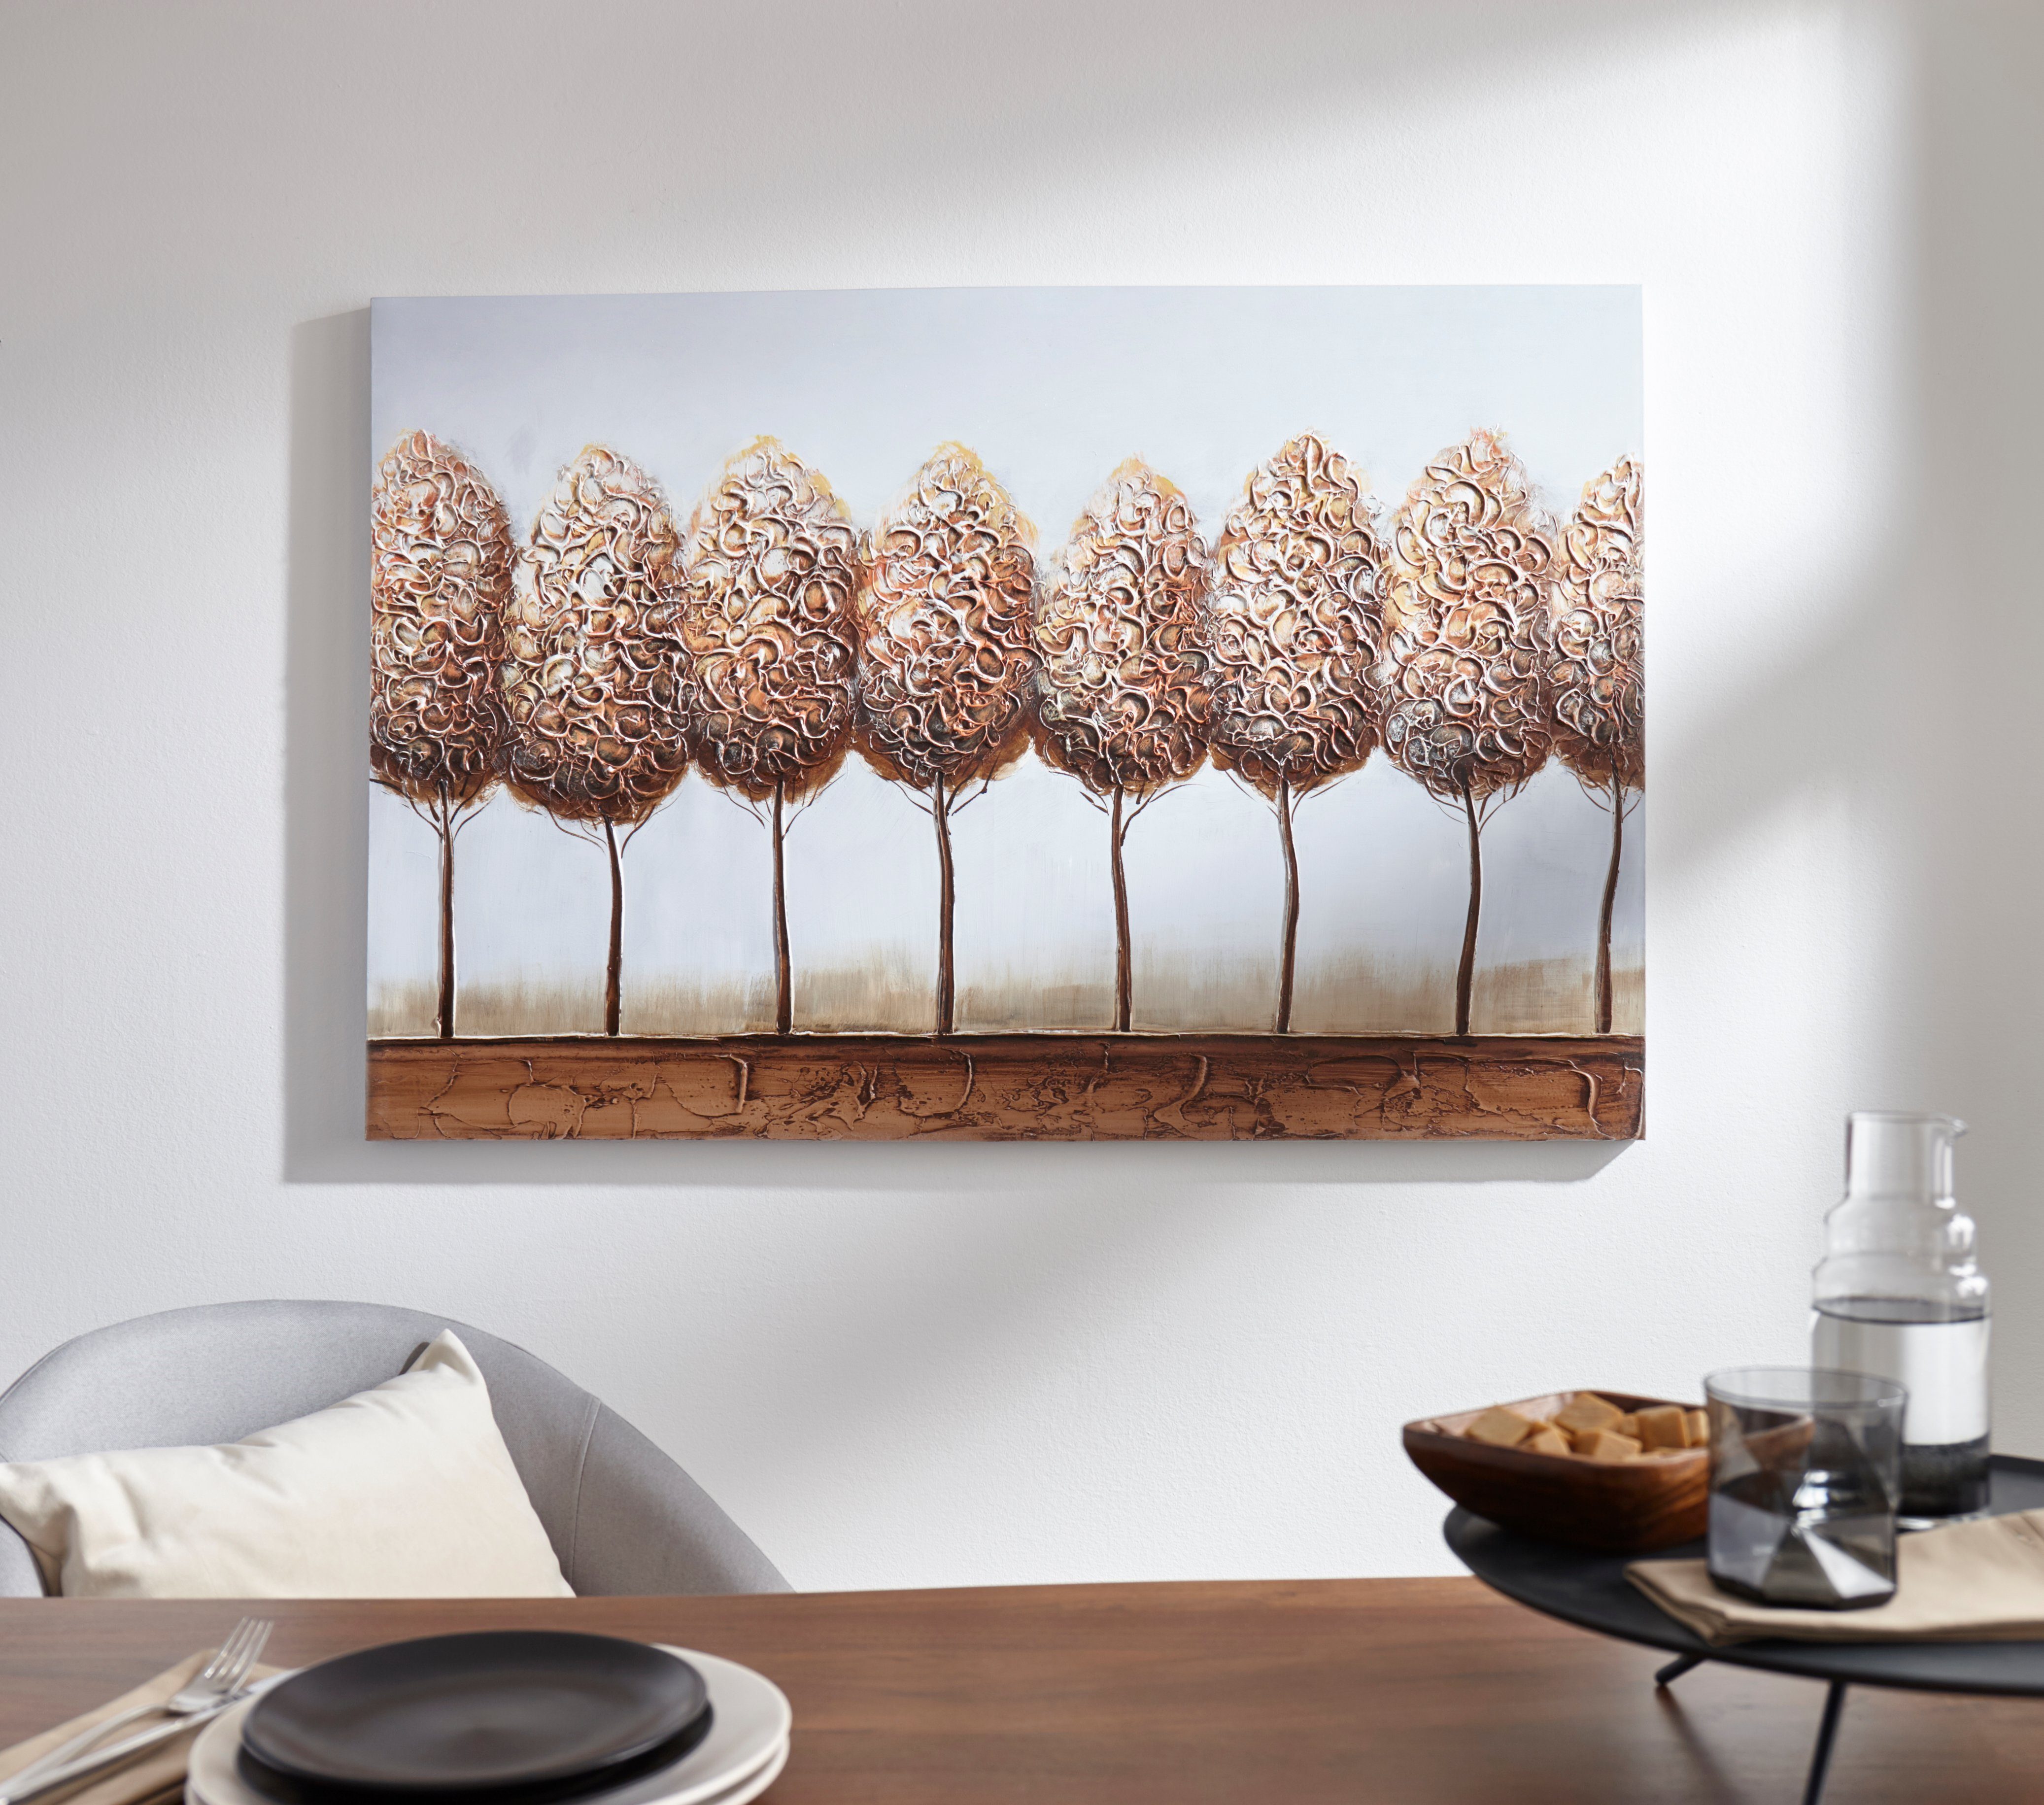 Home affaire Trees, Bäume, Wohnzimmer Leinwandbild cm, Motiv 120x80